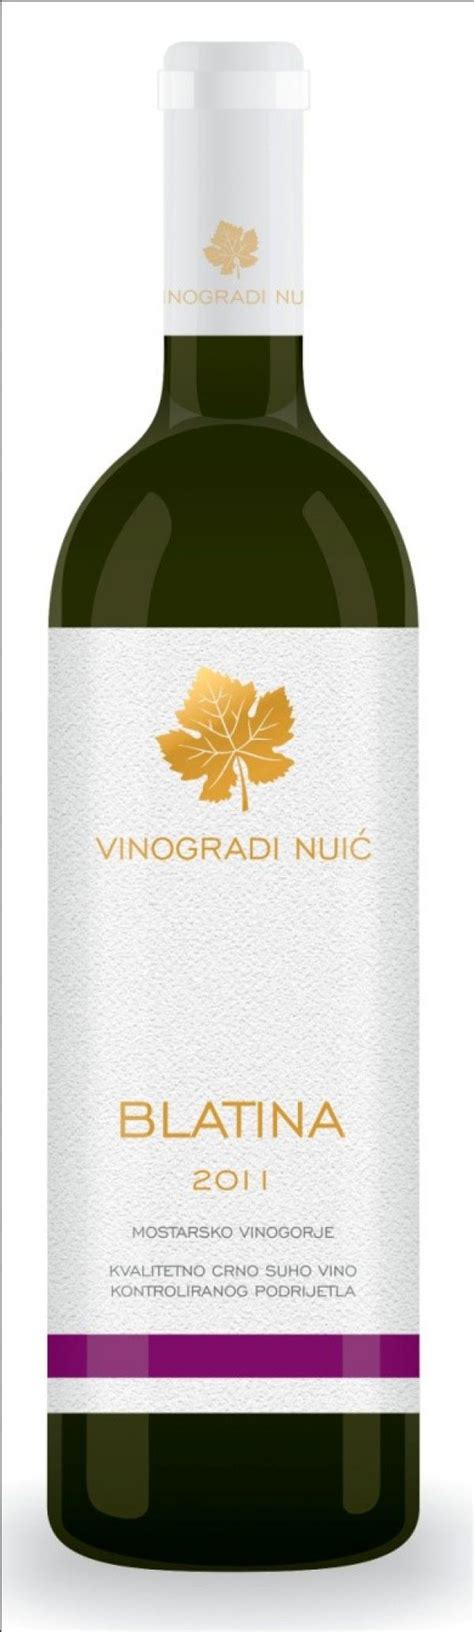 Vinogradi Nuic Blatina Quality Red Wine